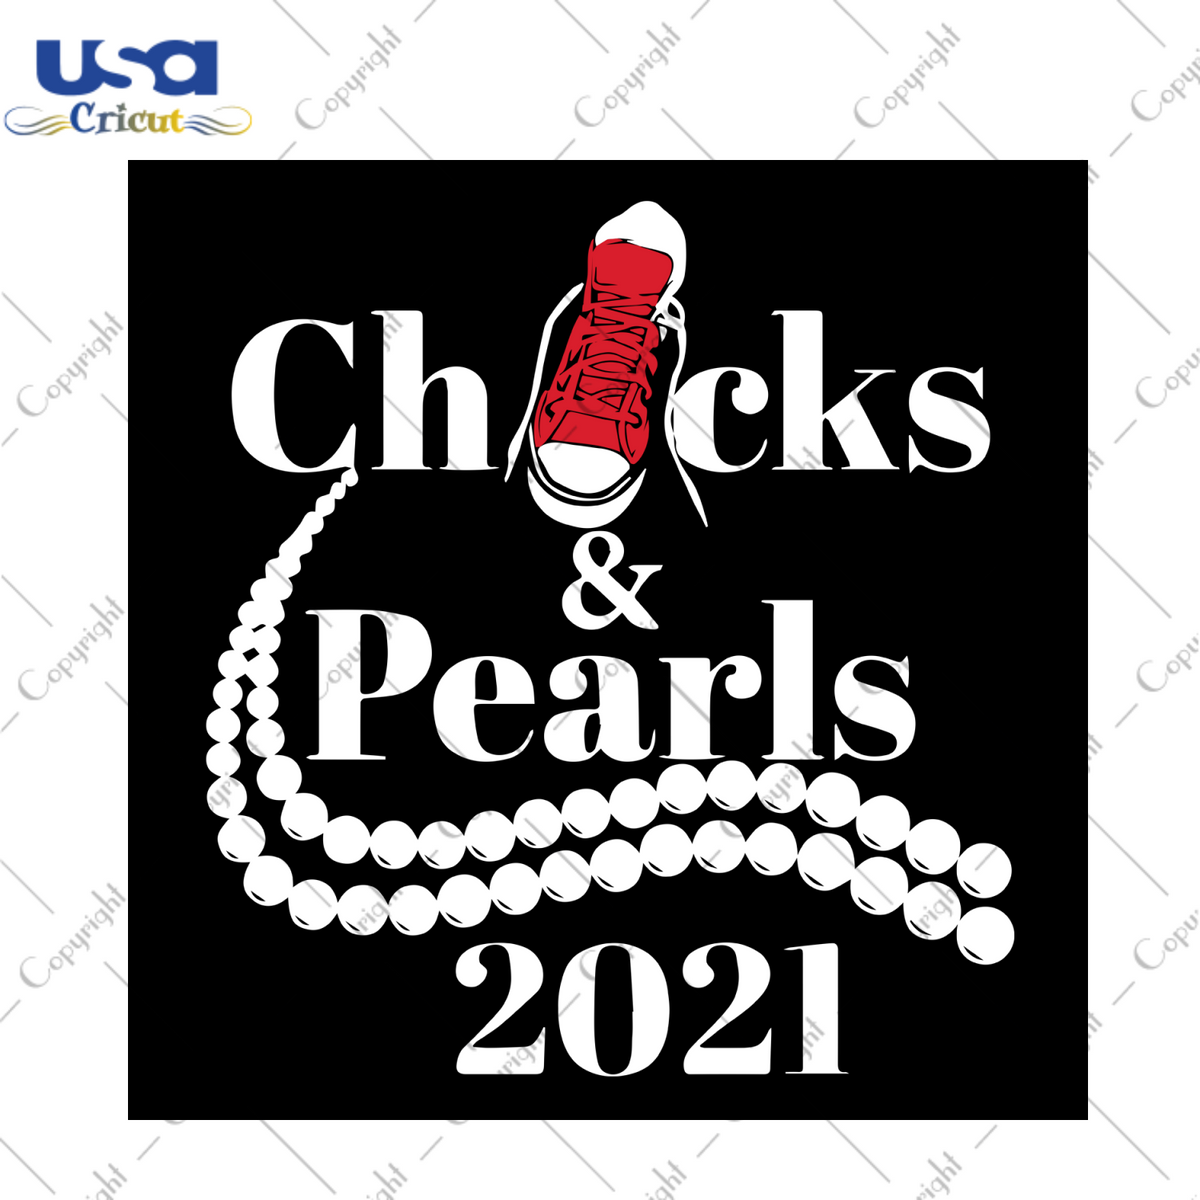 Chucks pearls Svg Png Kamala file download only